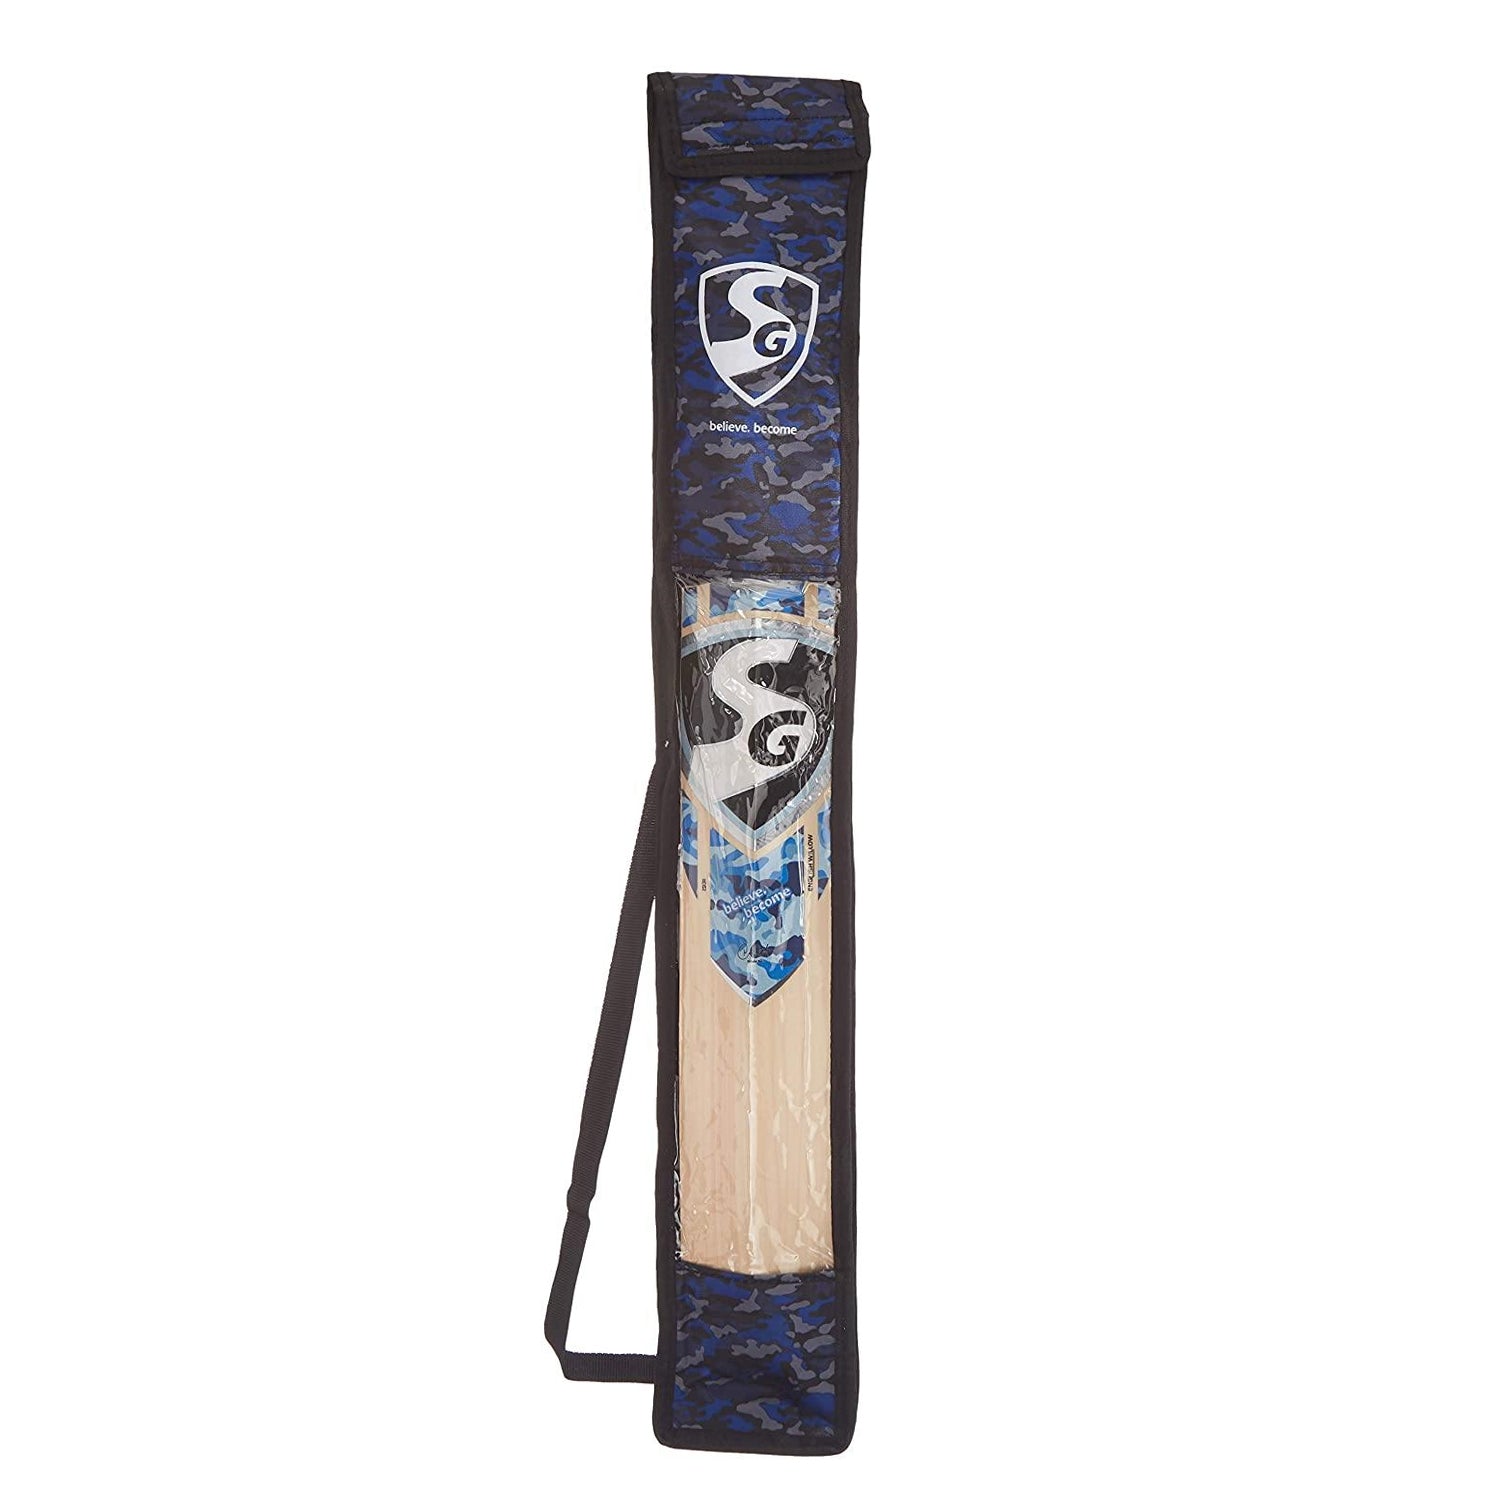 SG Players Edition Grade 1 English Willow Cricket Bat - Best Price online Prokicksports.com